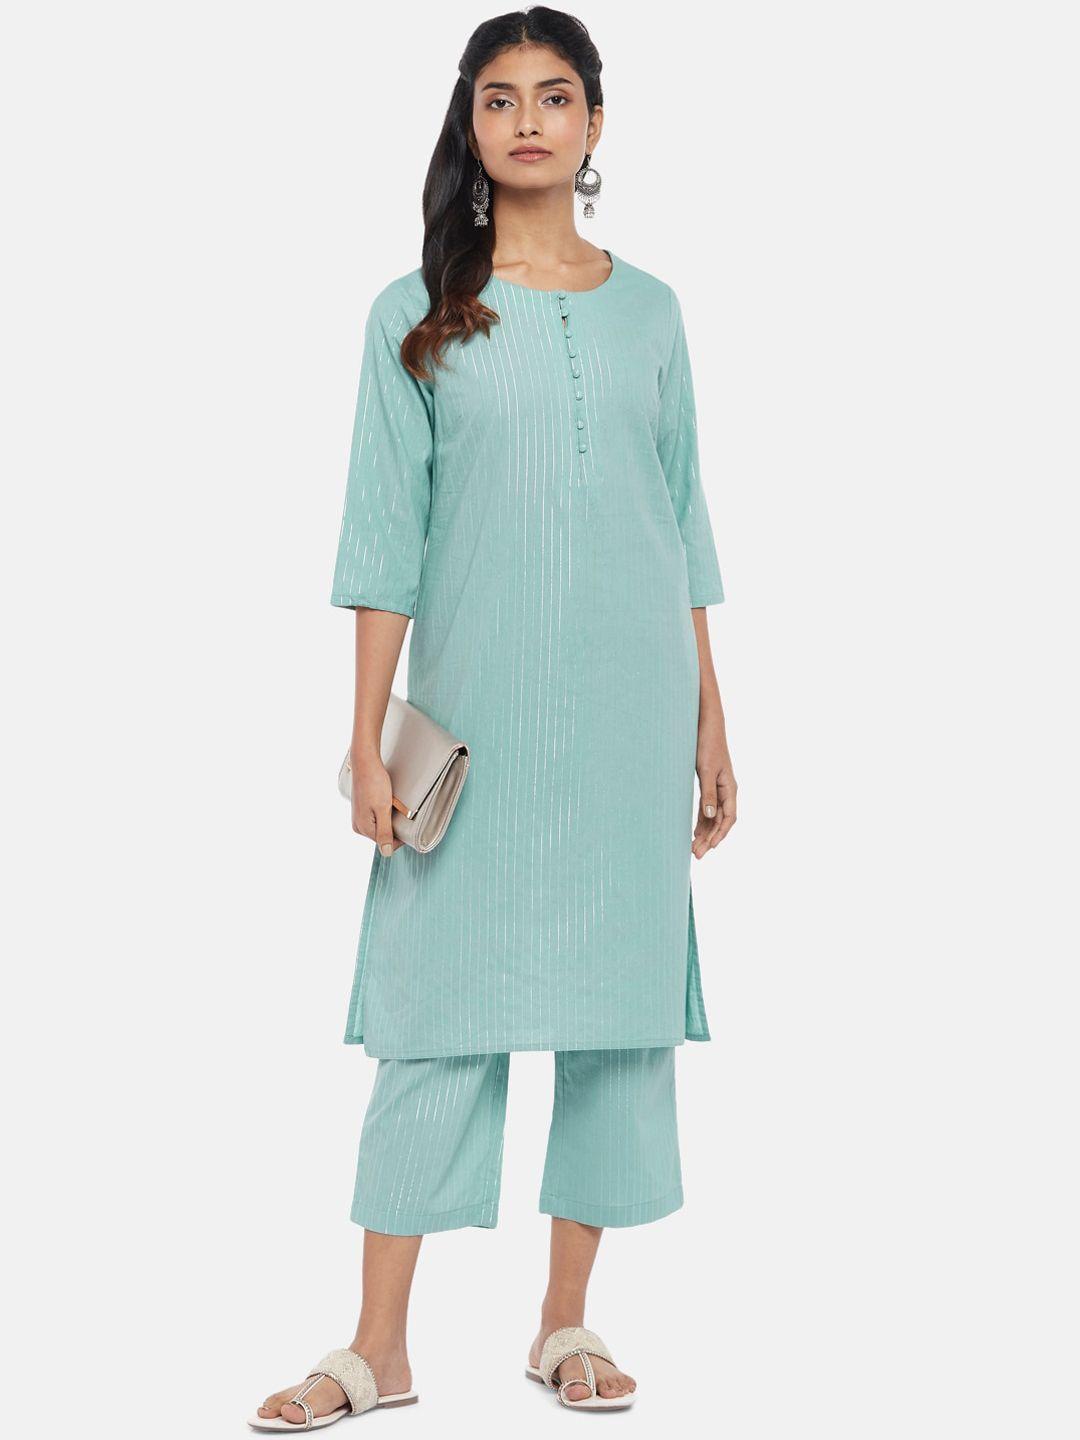 rangmanch by pantaloons women green striped pure cotton kurta with palazzos